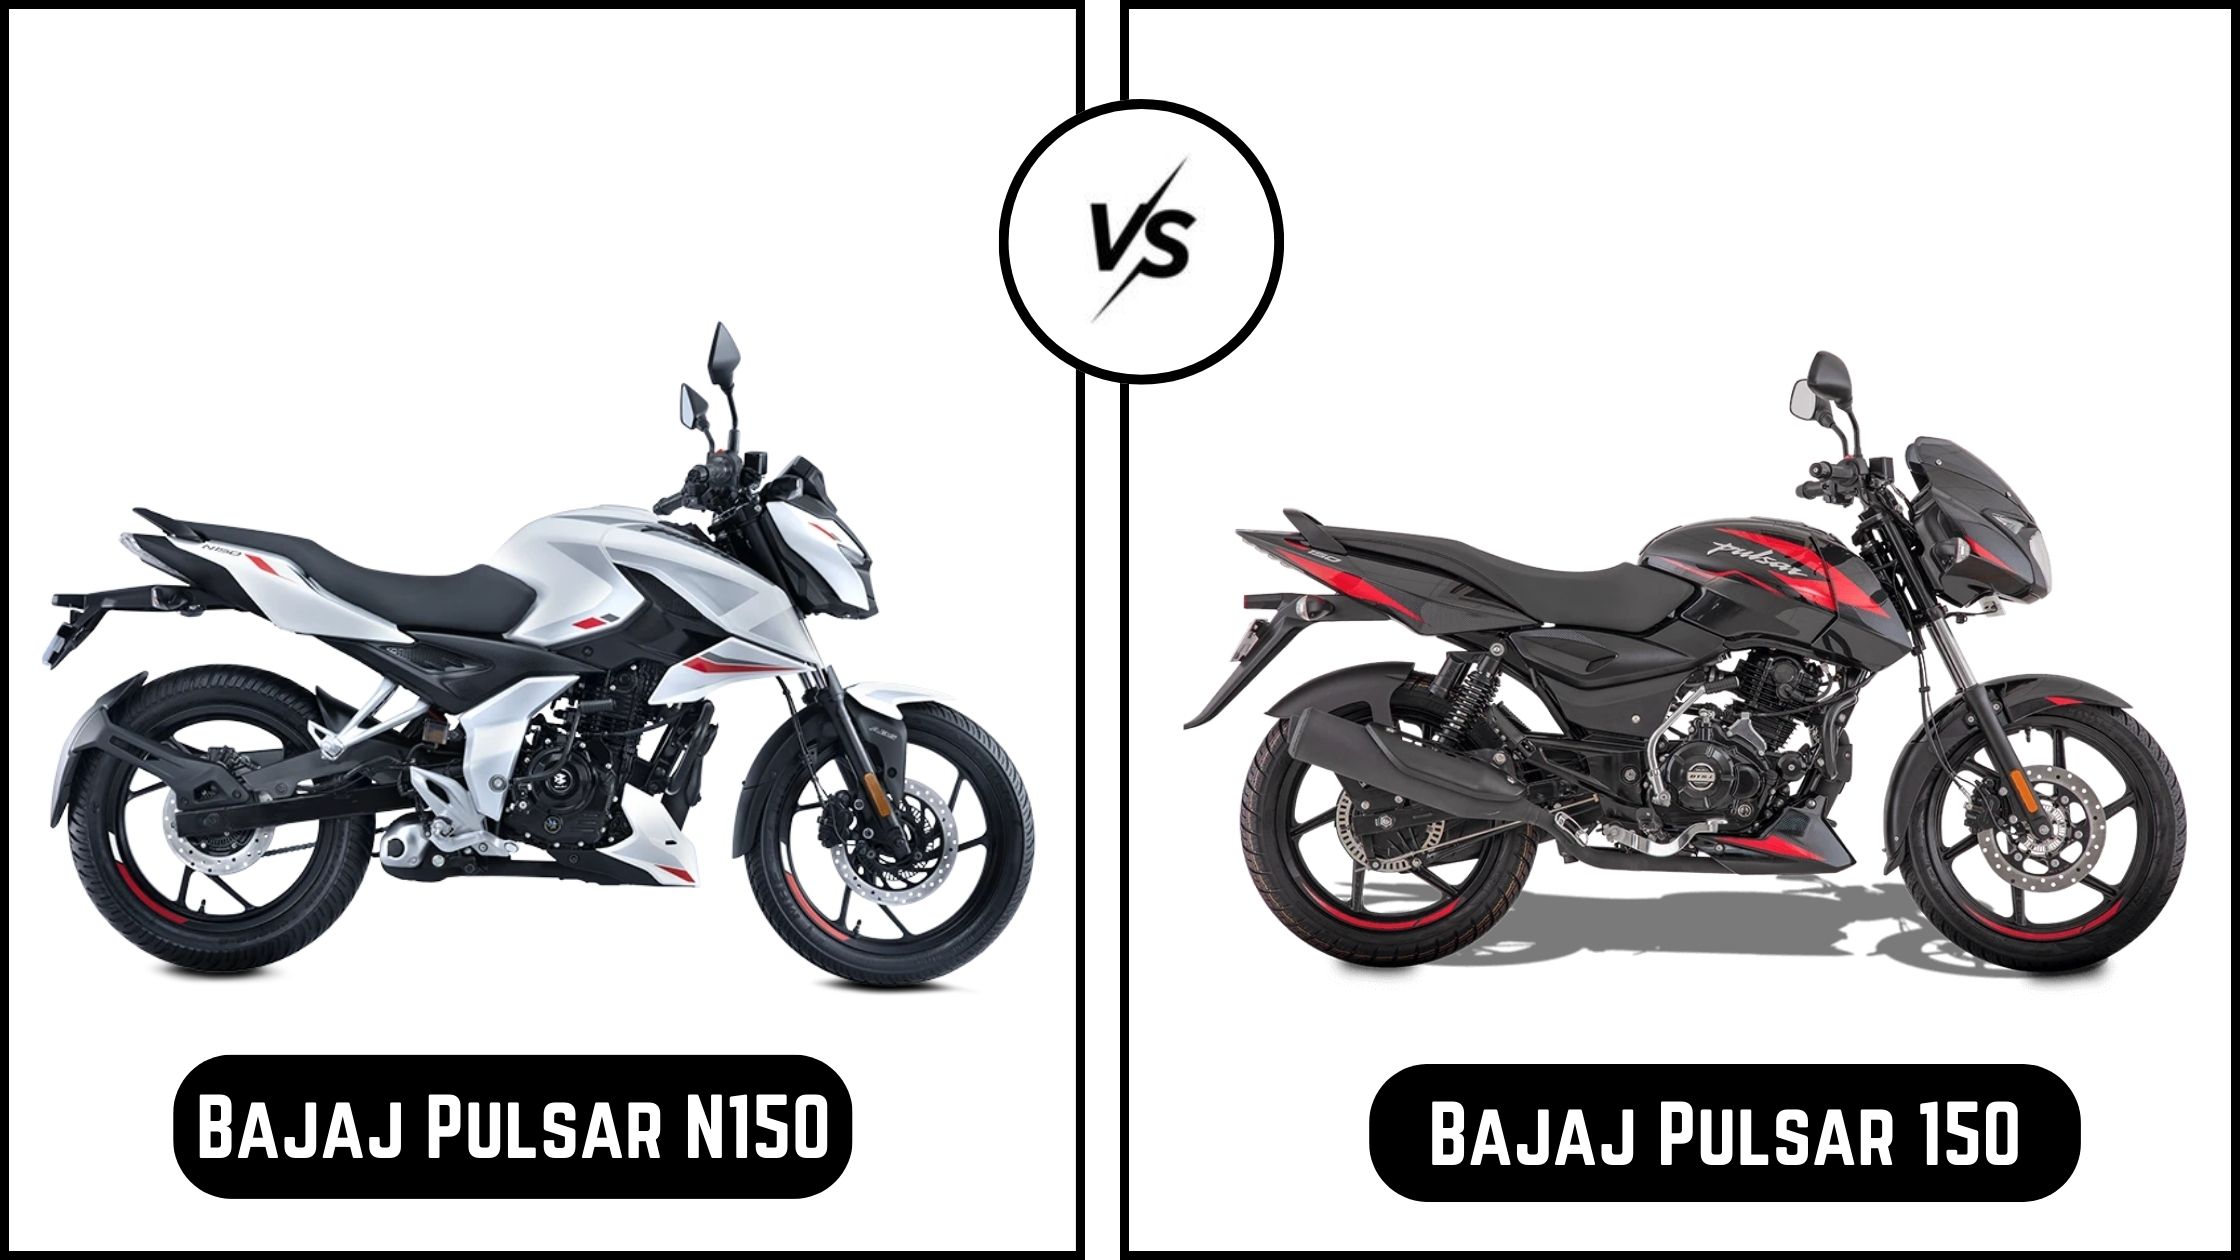 Bajaj Pulsar N150 VS Pulsar 150: Image Comparison